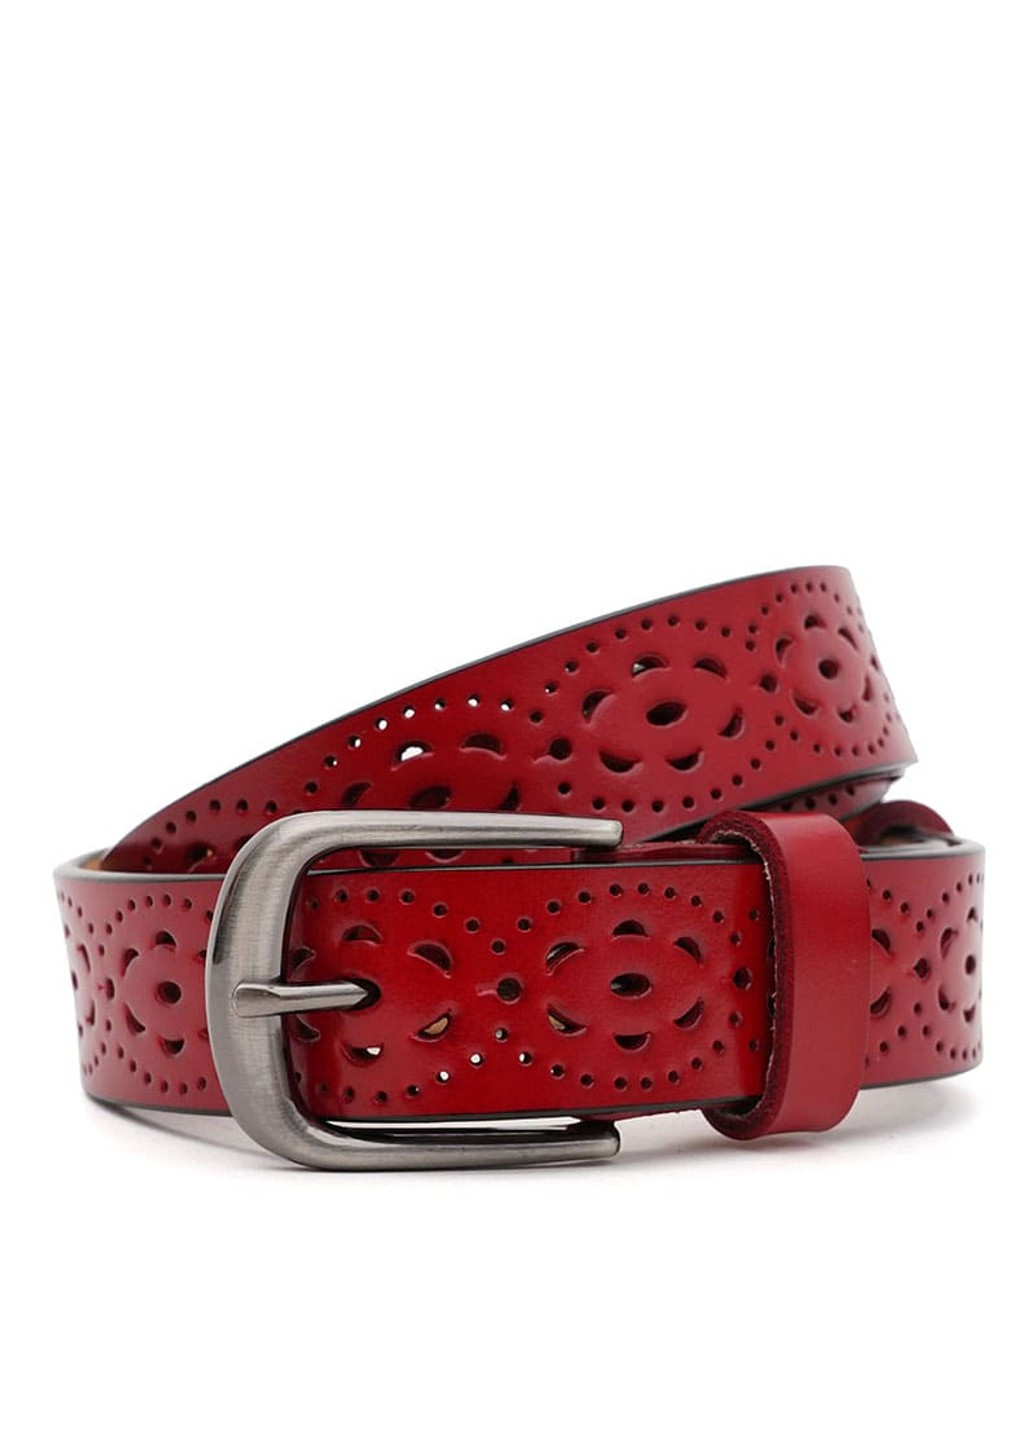 Женский кожаный ремень CV1ZK-040r-red Borsa Leather (266144003)